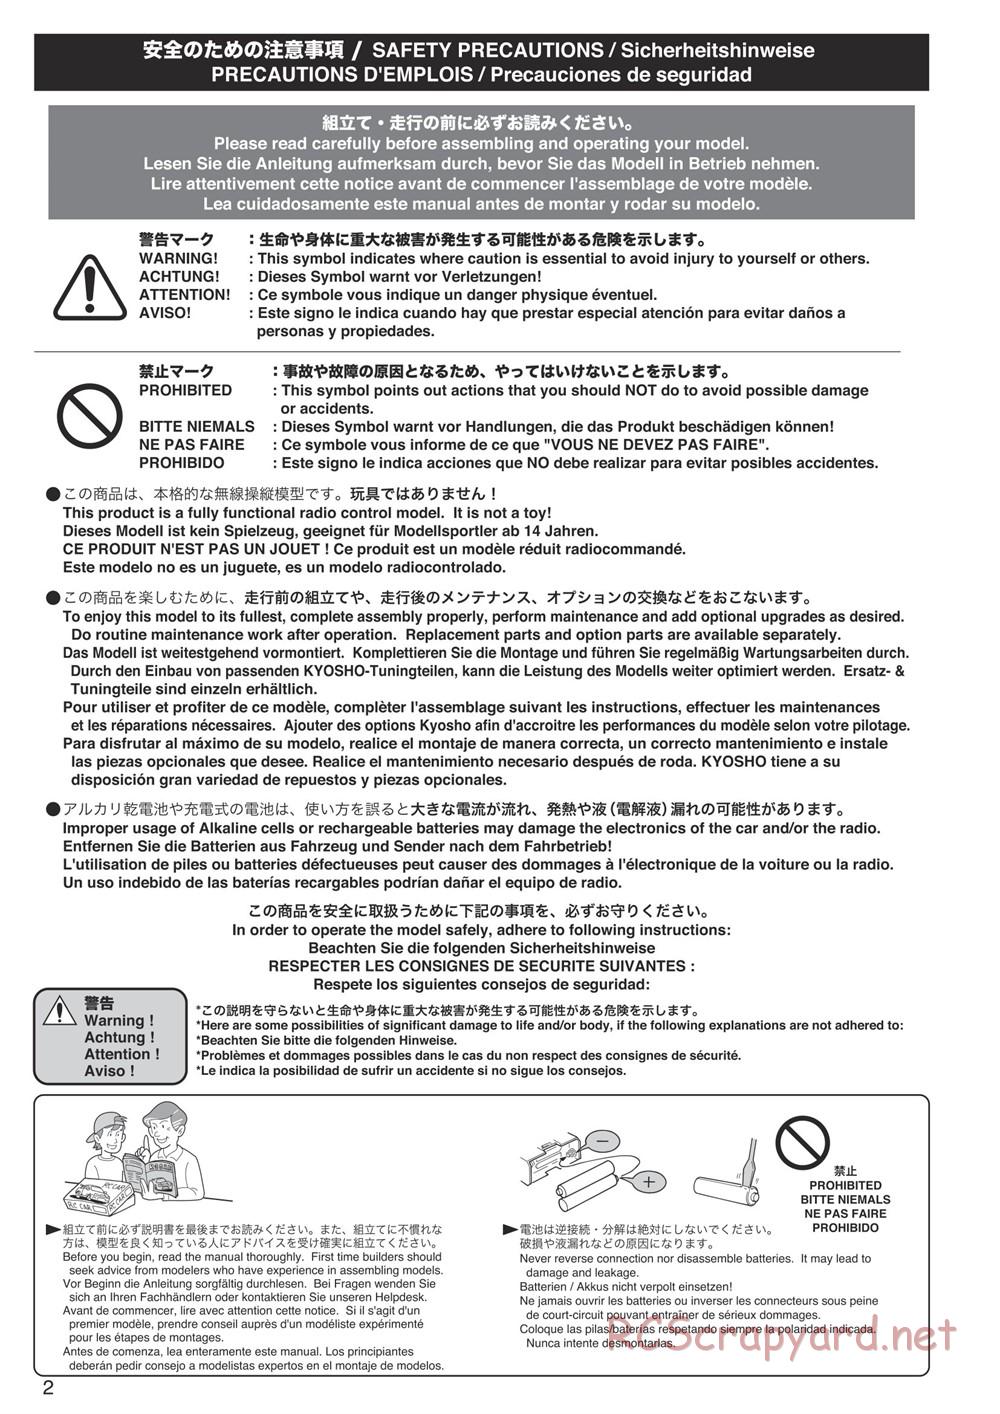 Kyosho - DBX 2.0 - Manual - Page 2